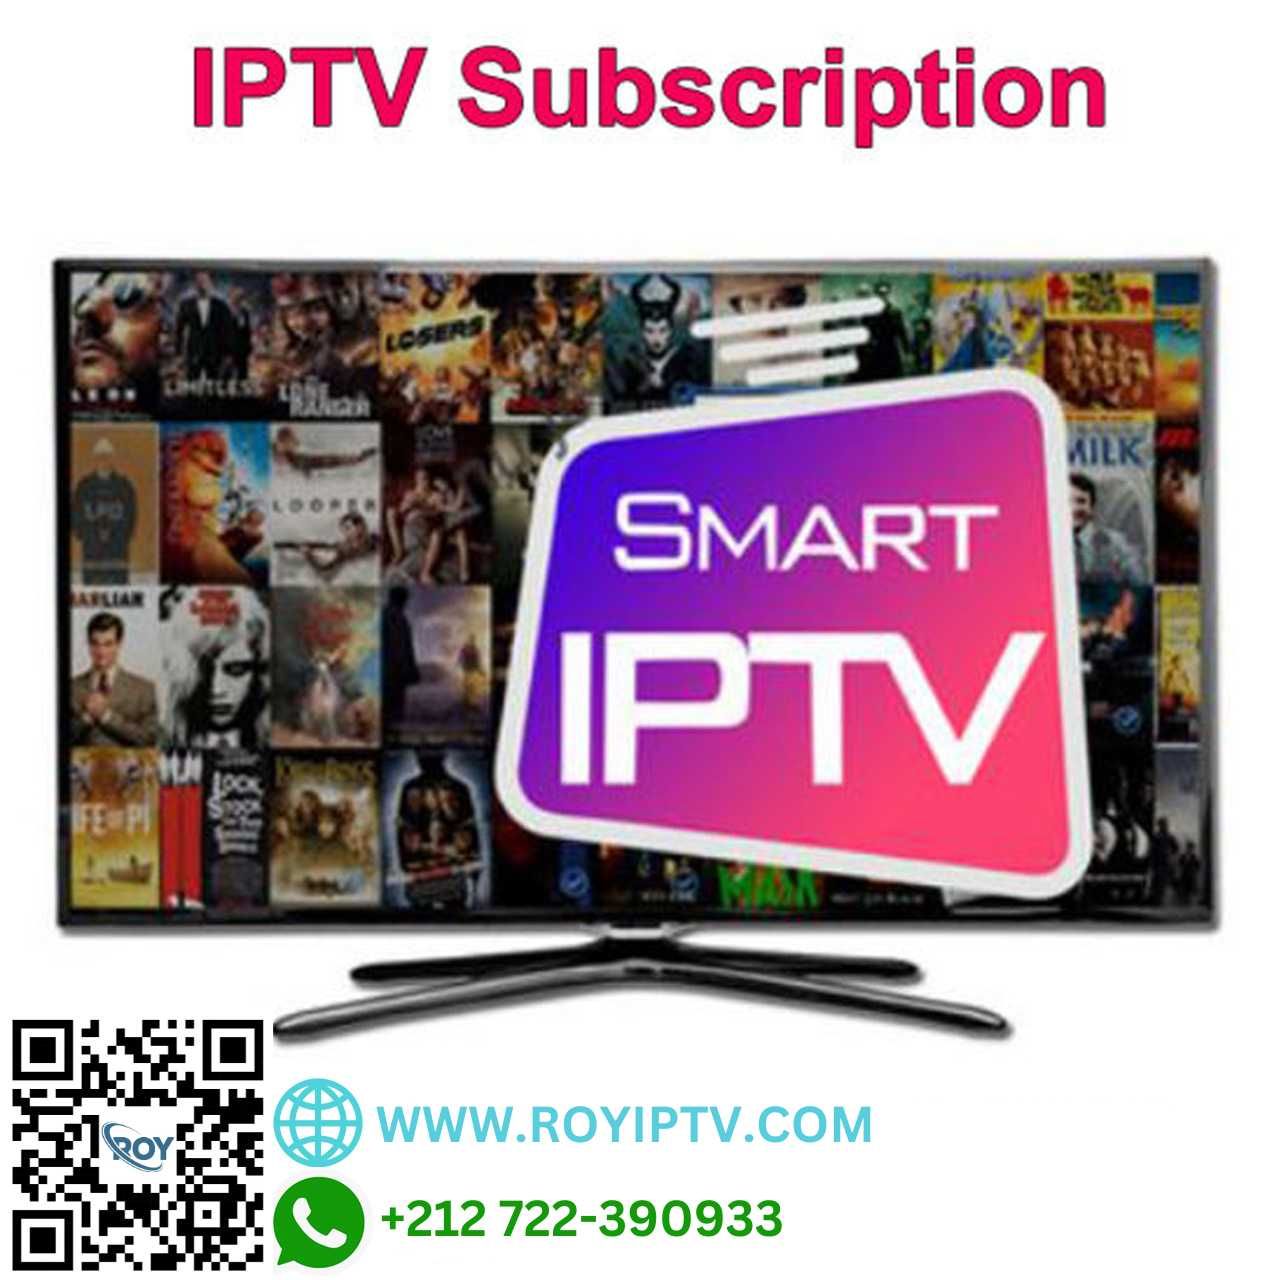 Server IPTV Premium 4K UHD (1 an)A